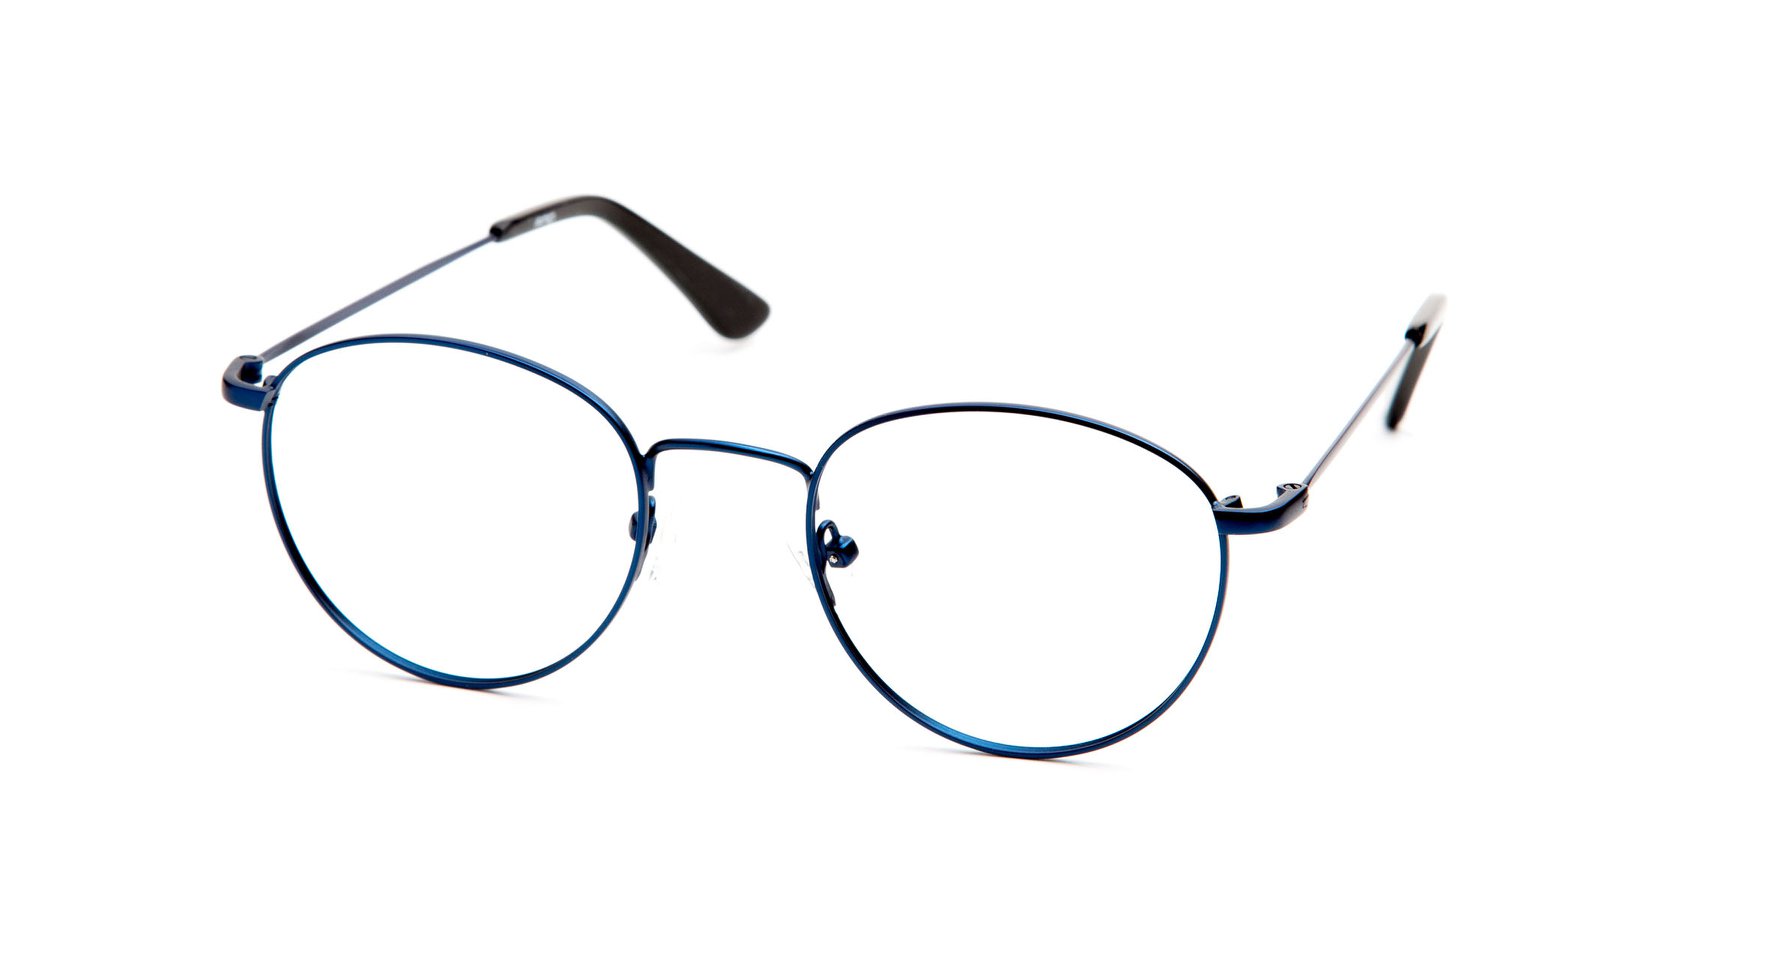 Cuatro gafas redondas y cuadrada - Farmaoptics